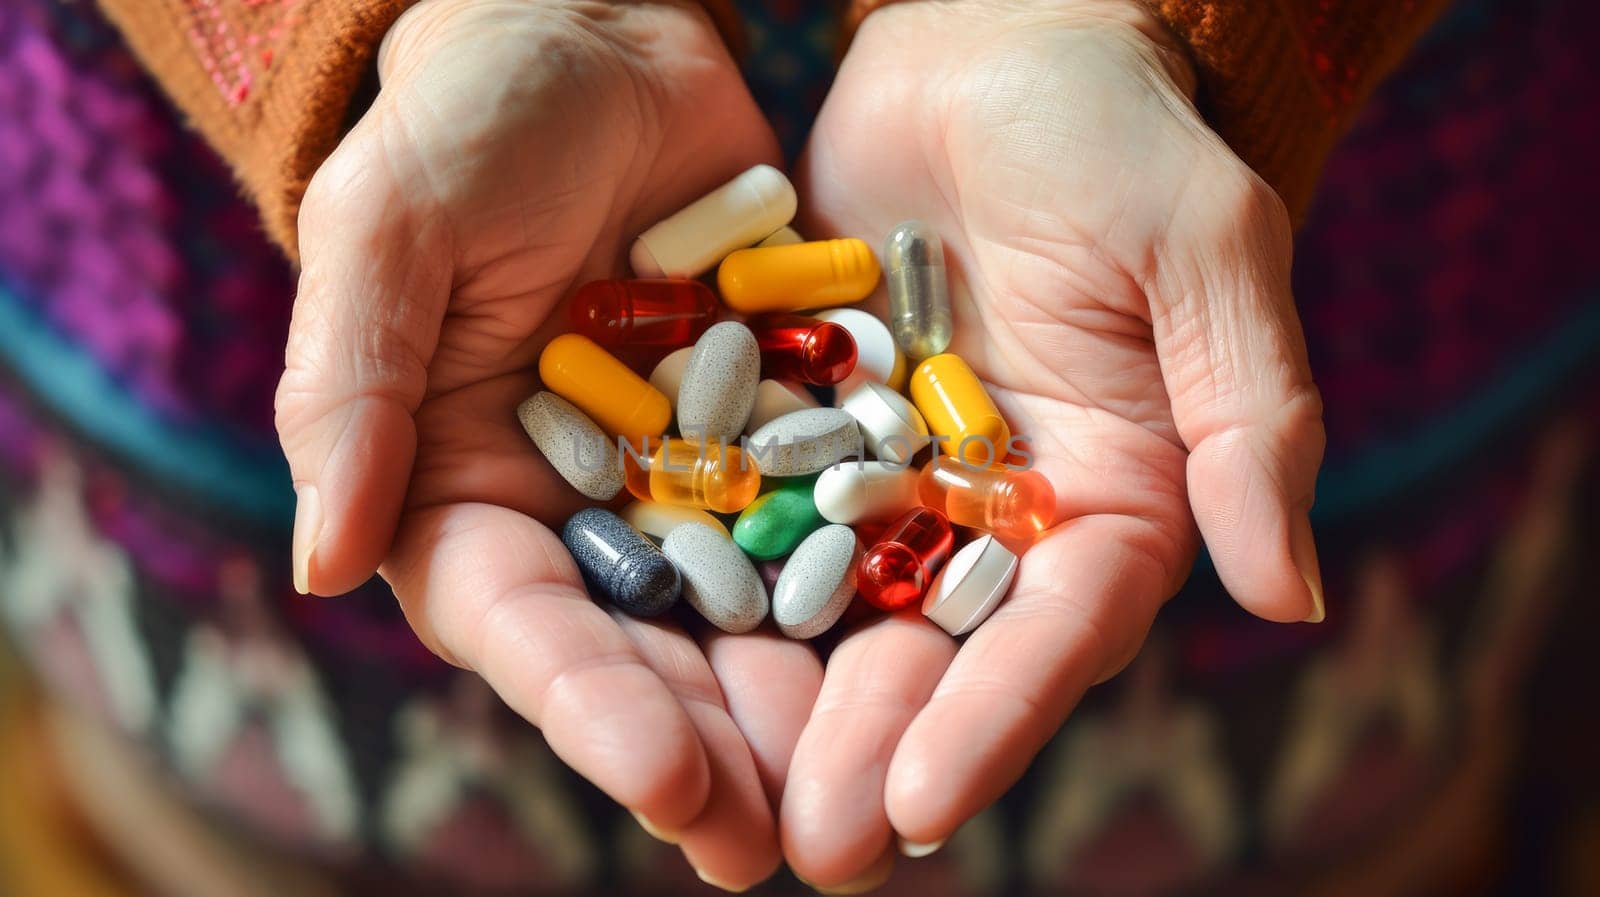 Pills in the hands of an elderly man. by Alla_Yurtayeva